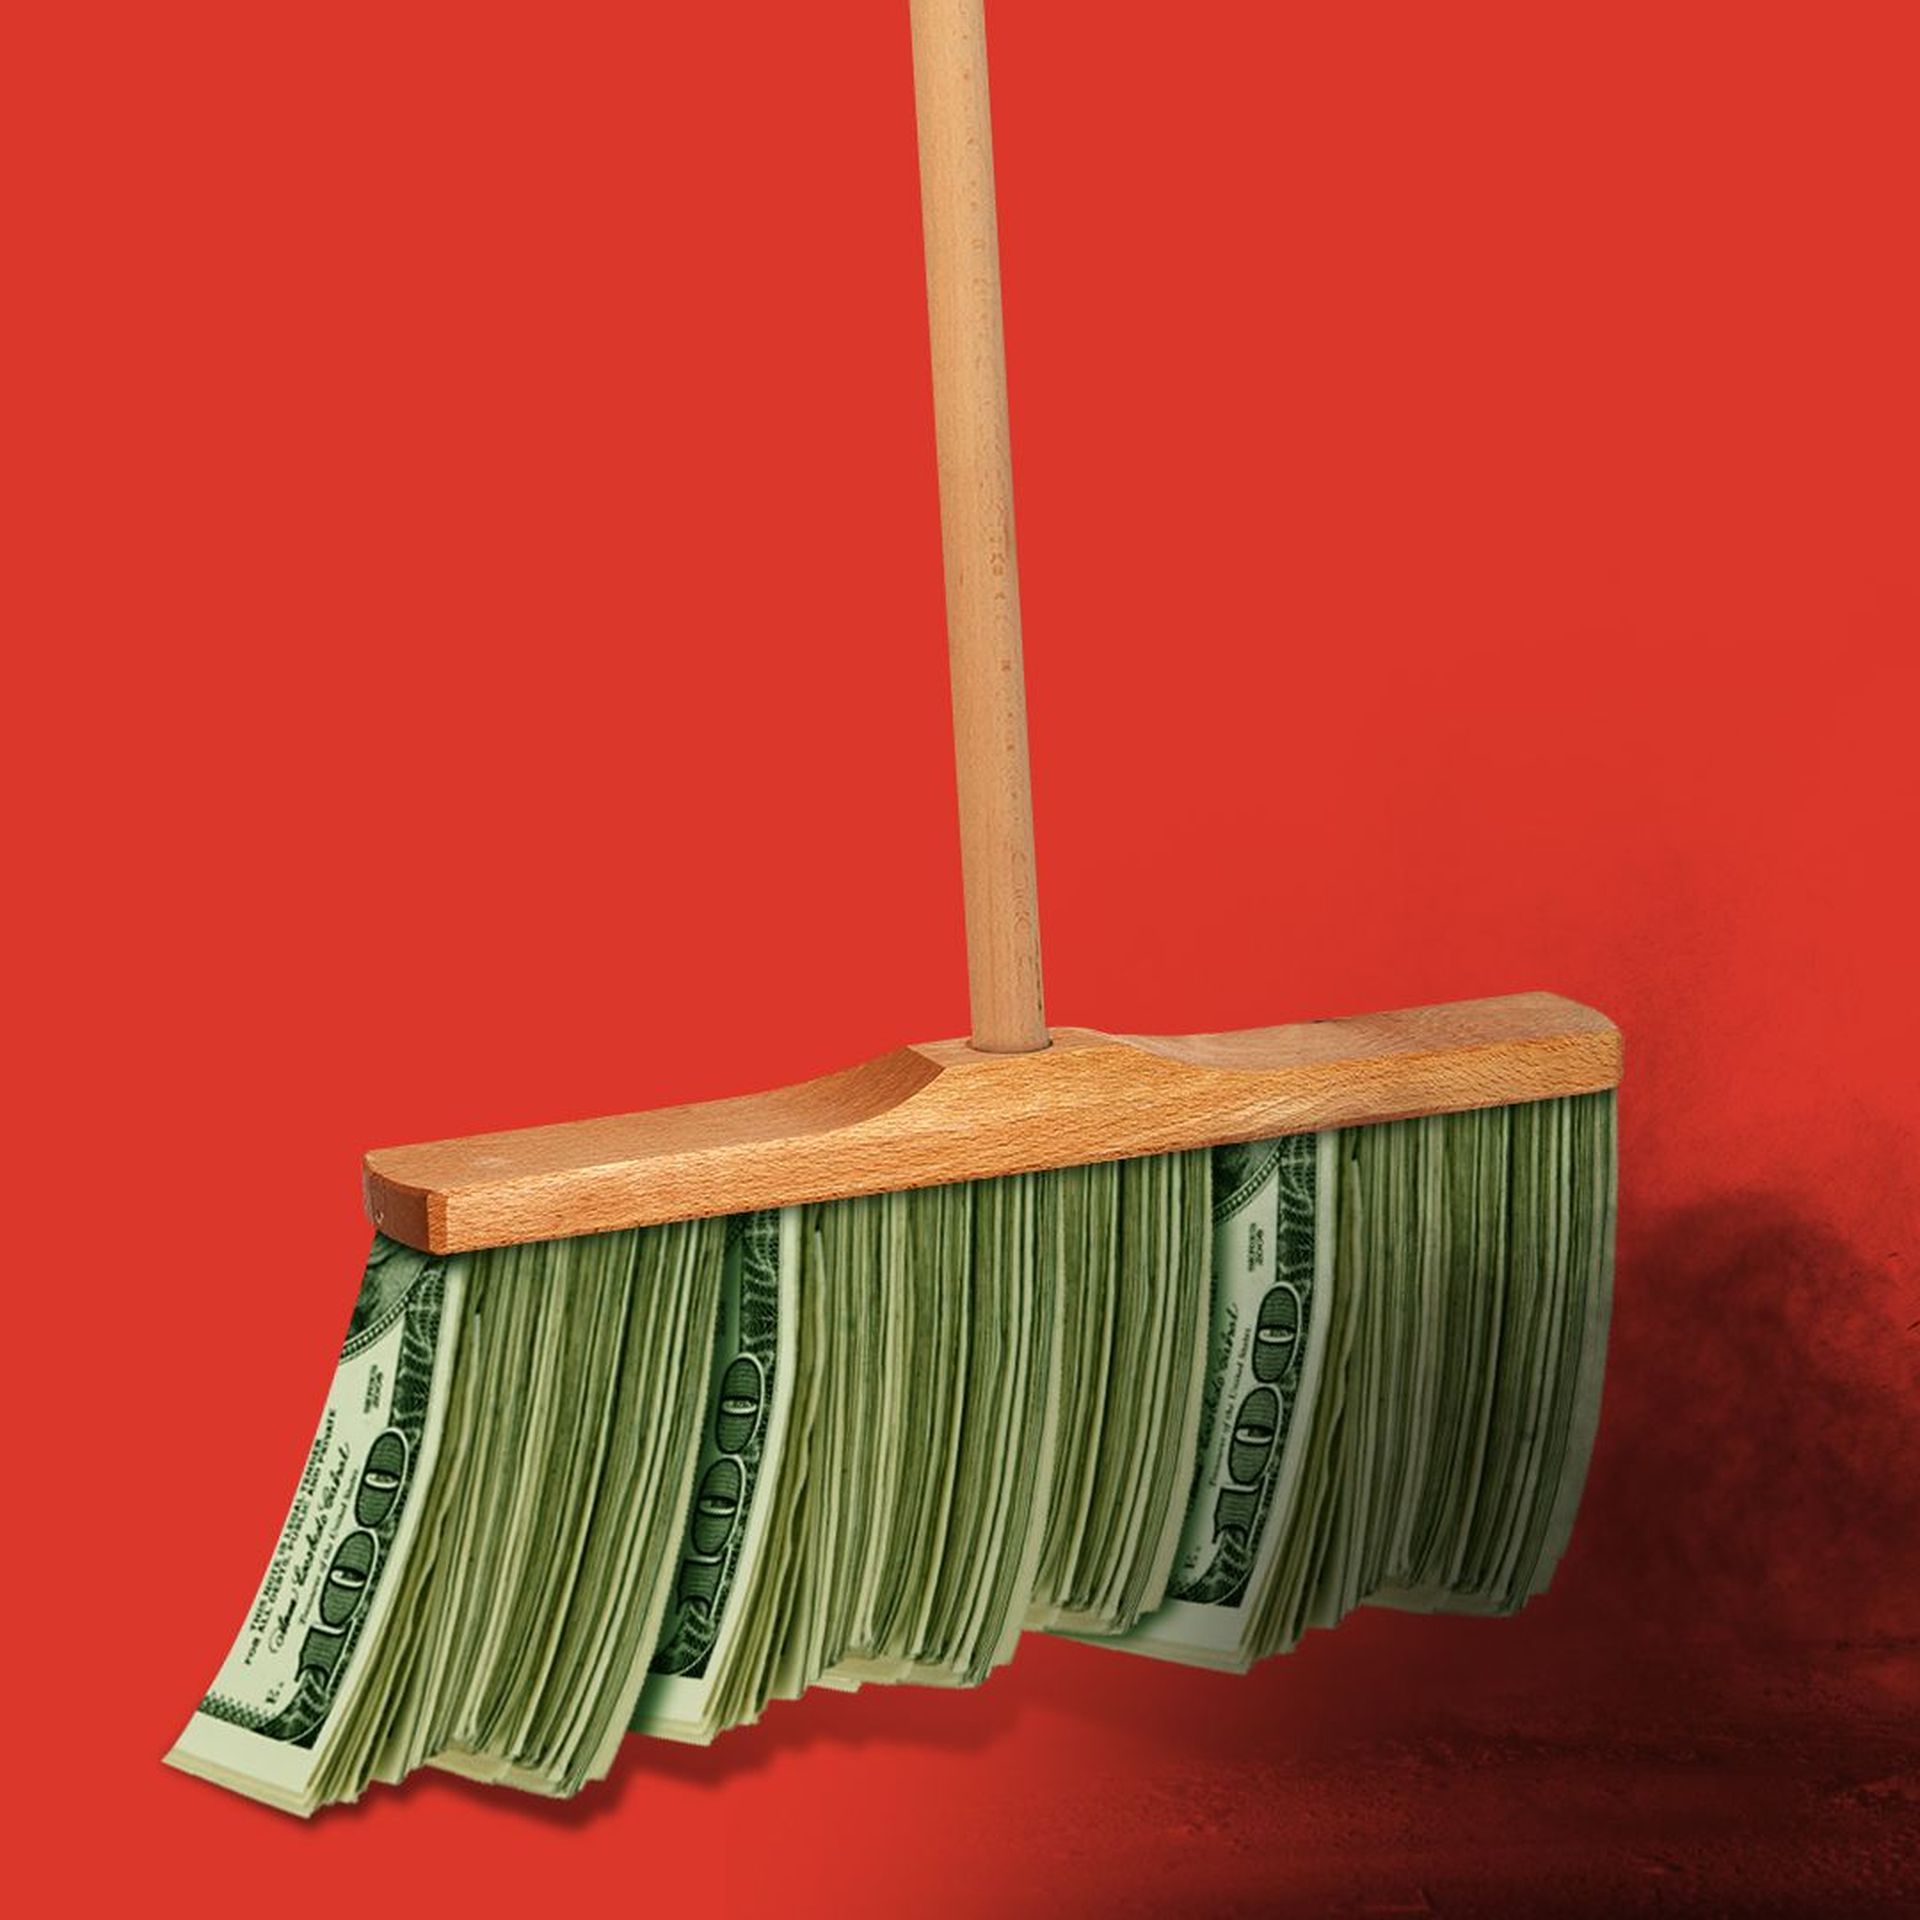 Illustration of a broom made of hundred dollar bills sweeping coal dust